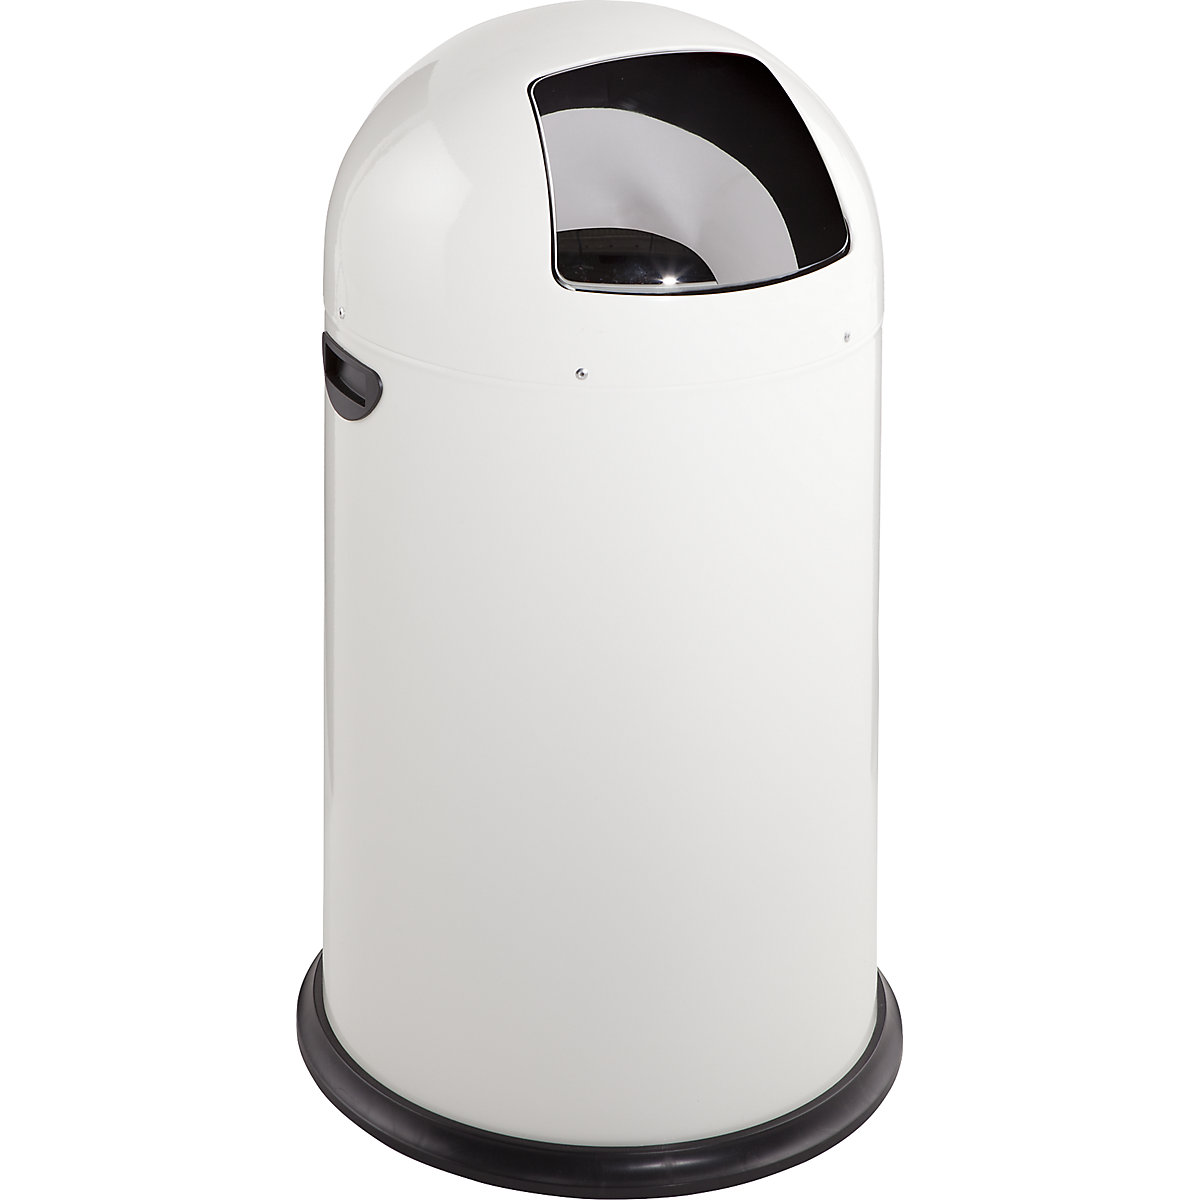 VAR – Coș de gunoi cu capac rabatabil, volum 40 l, înălțime 740 mm, alb